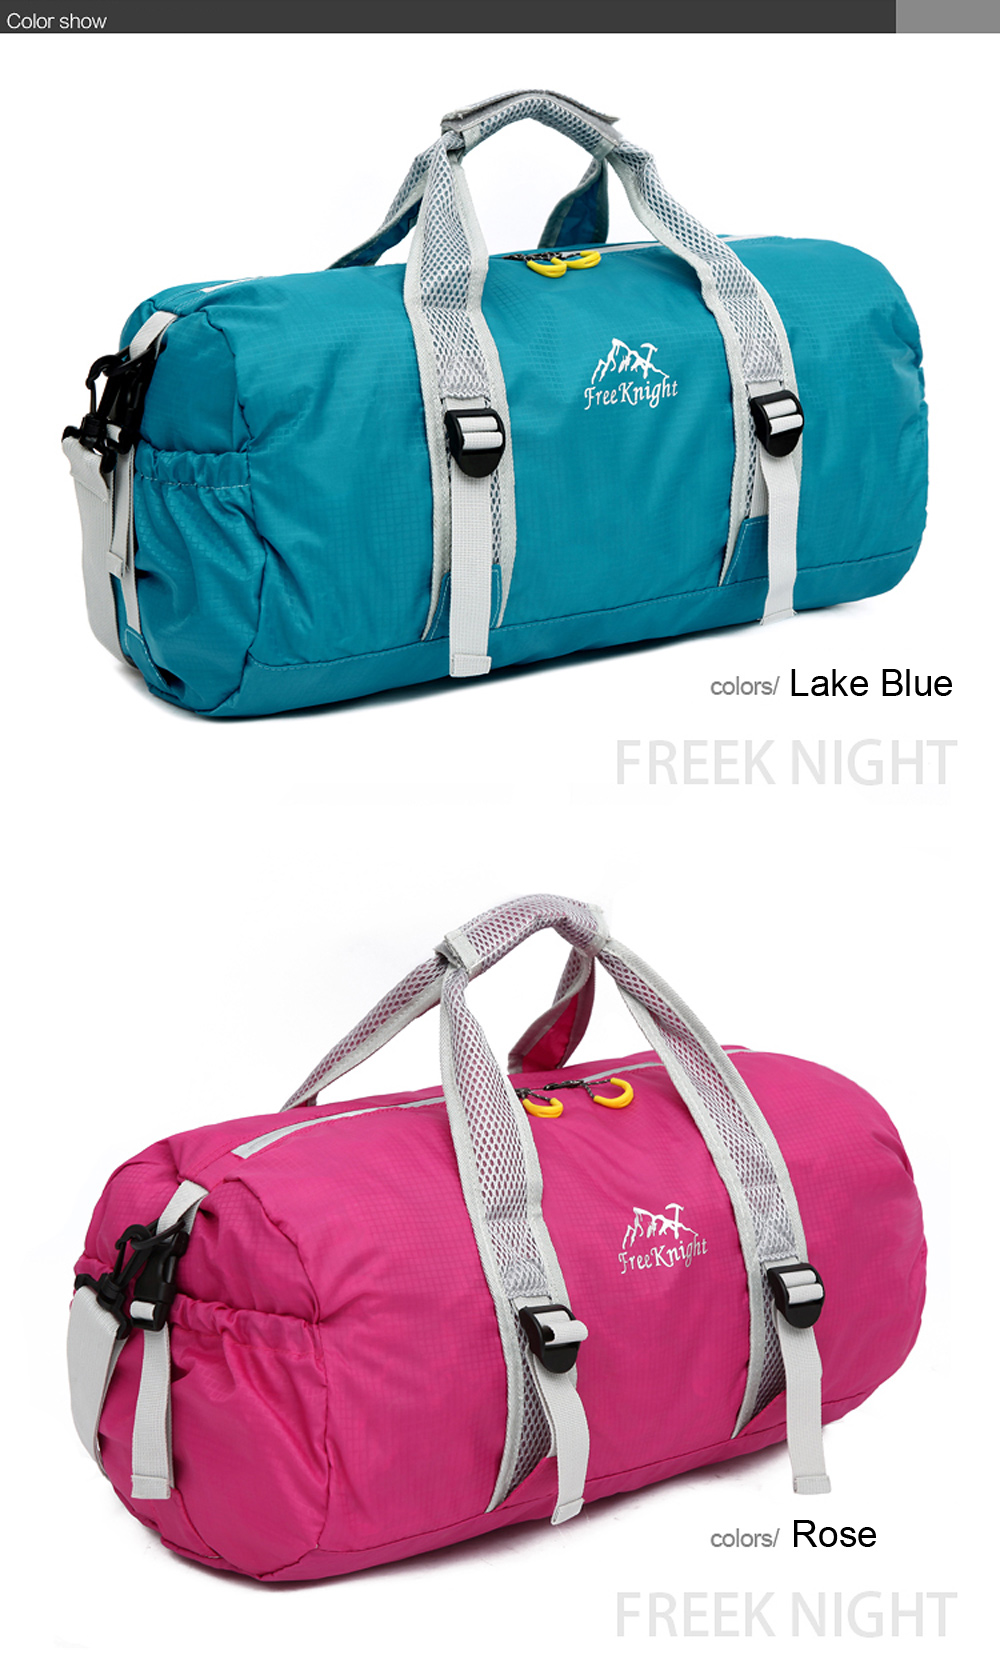 Free Knight FK0726 Unisex Nylon Folding Water Resistant Handbag Shoulder Bag for Camping Hiking Traveling Sports